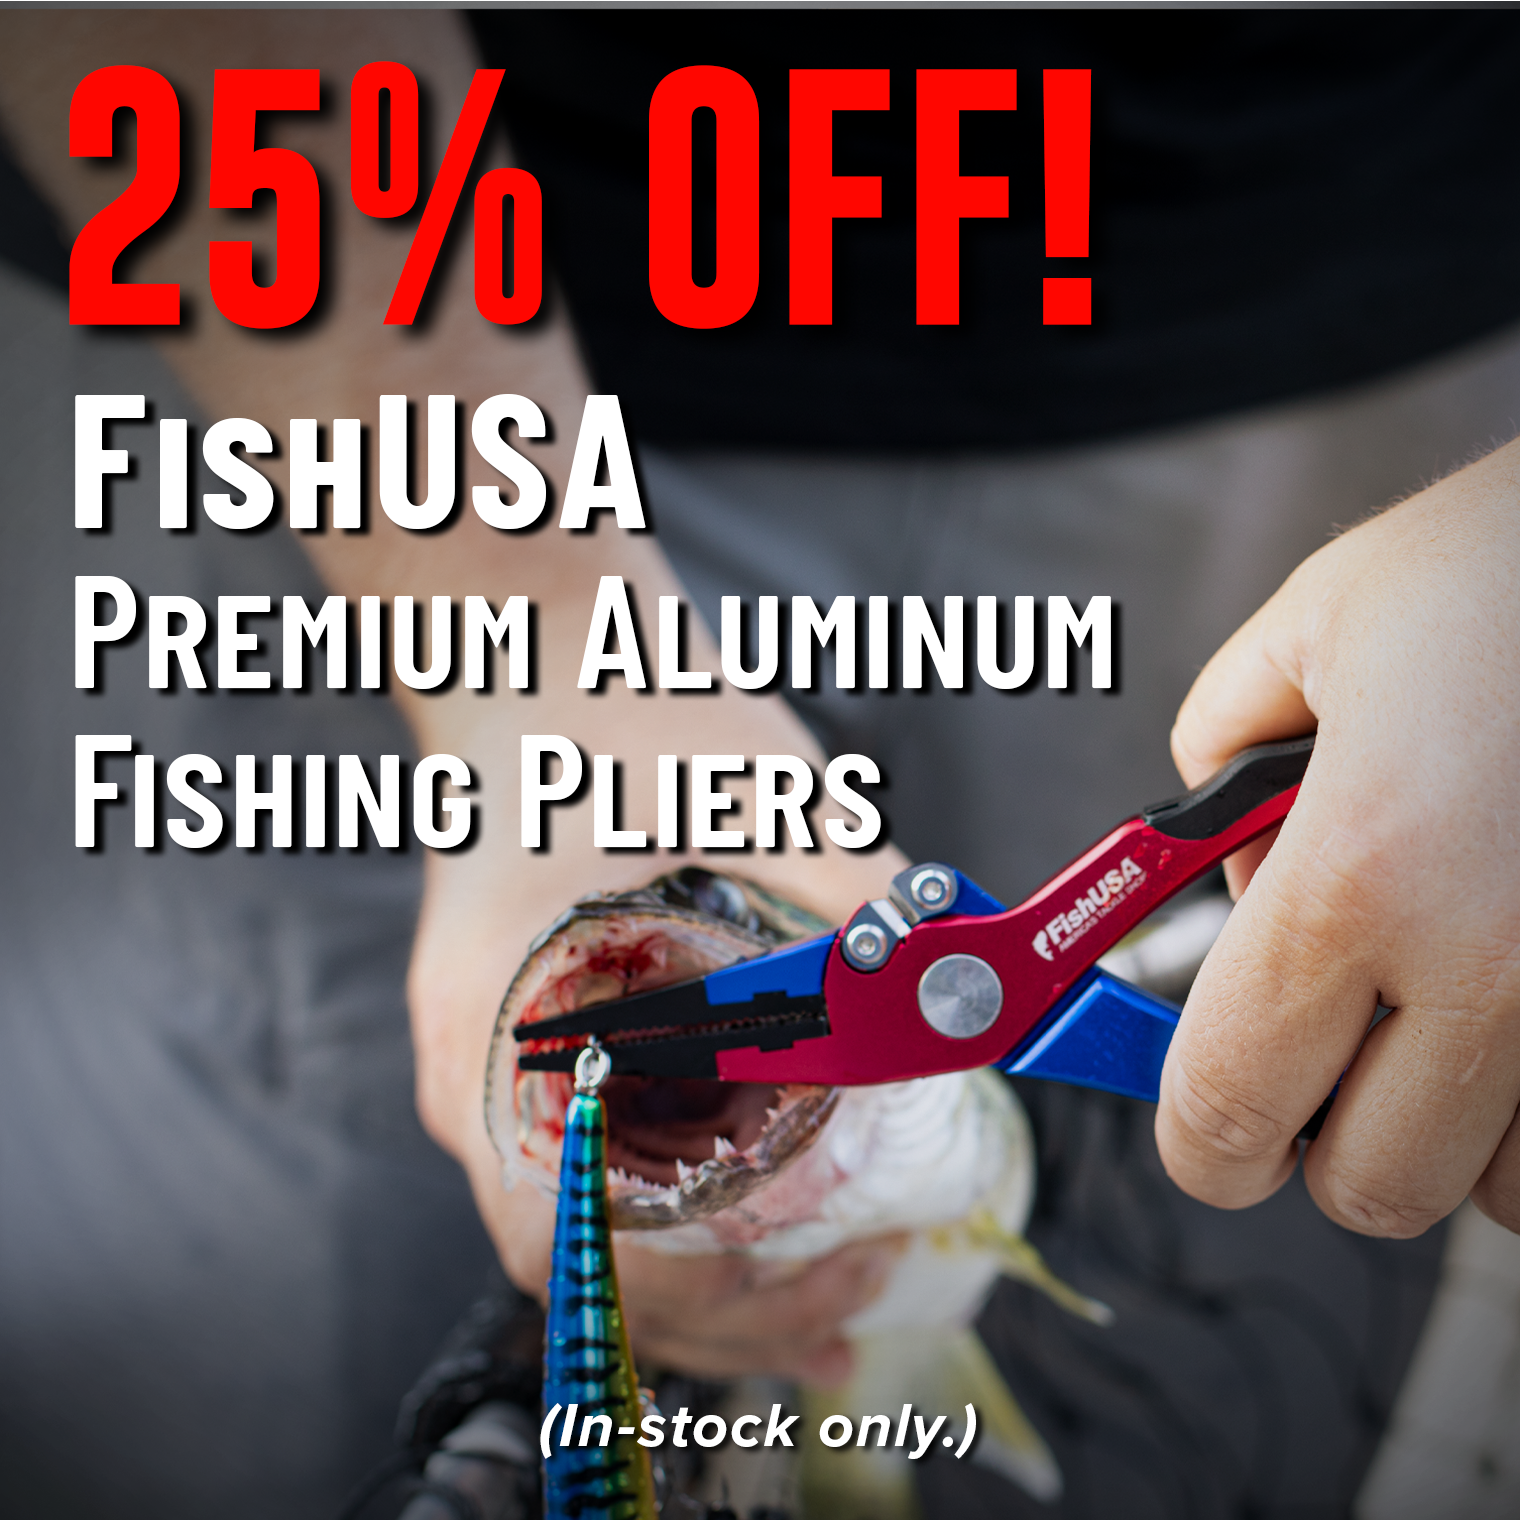 25% Off! FishUSA Premium Aluminum Fishing Pliers (In-stock only.)